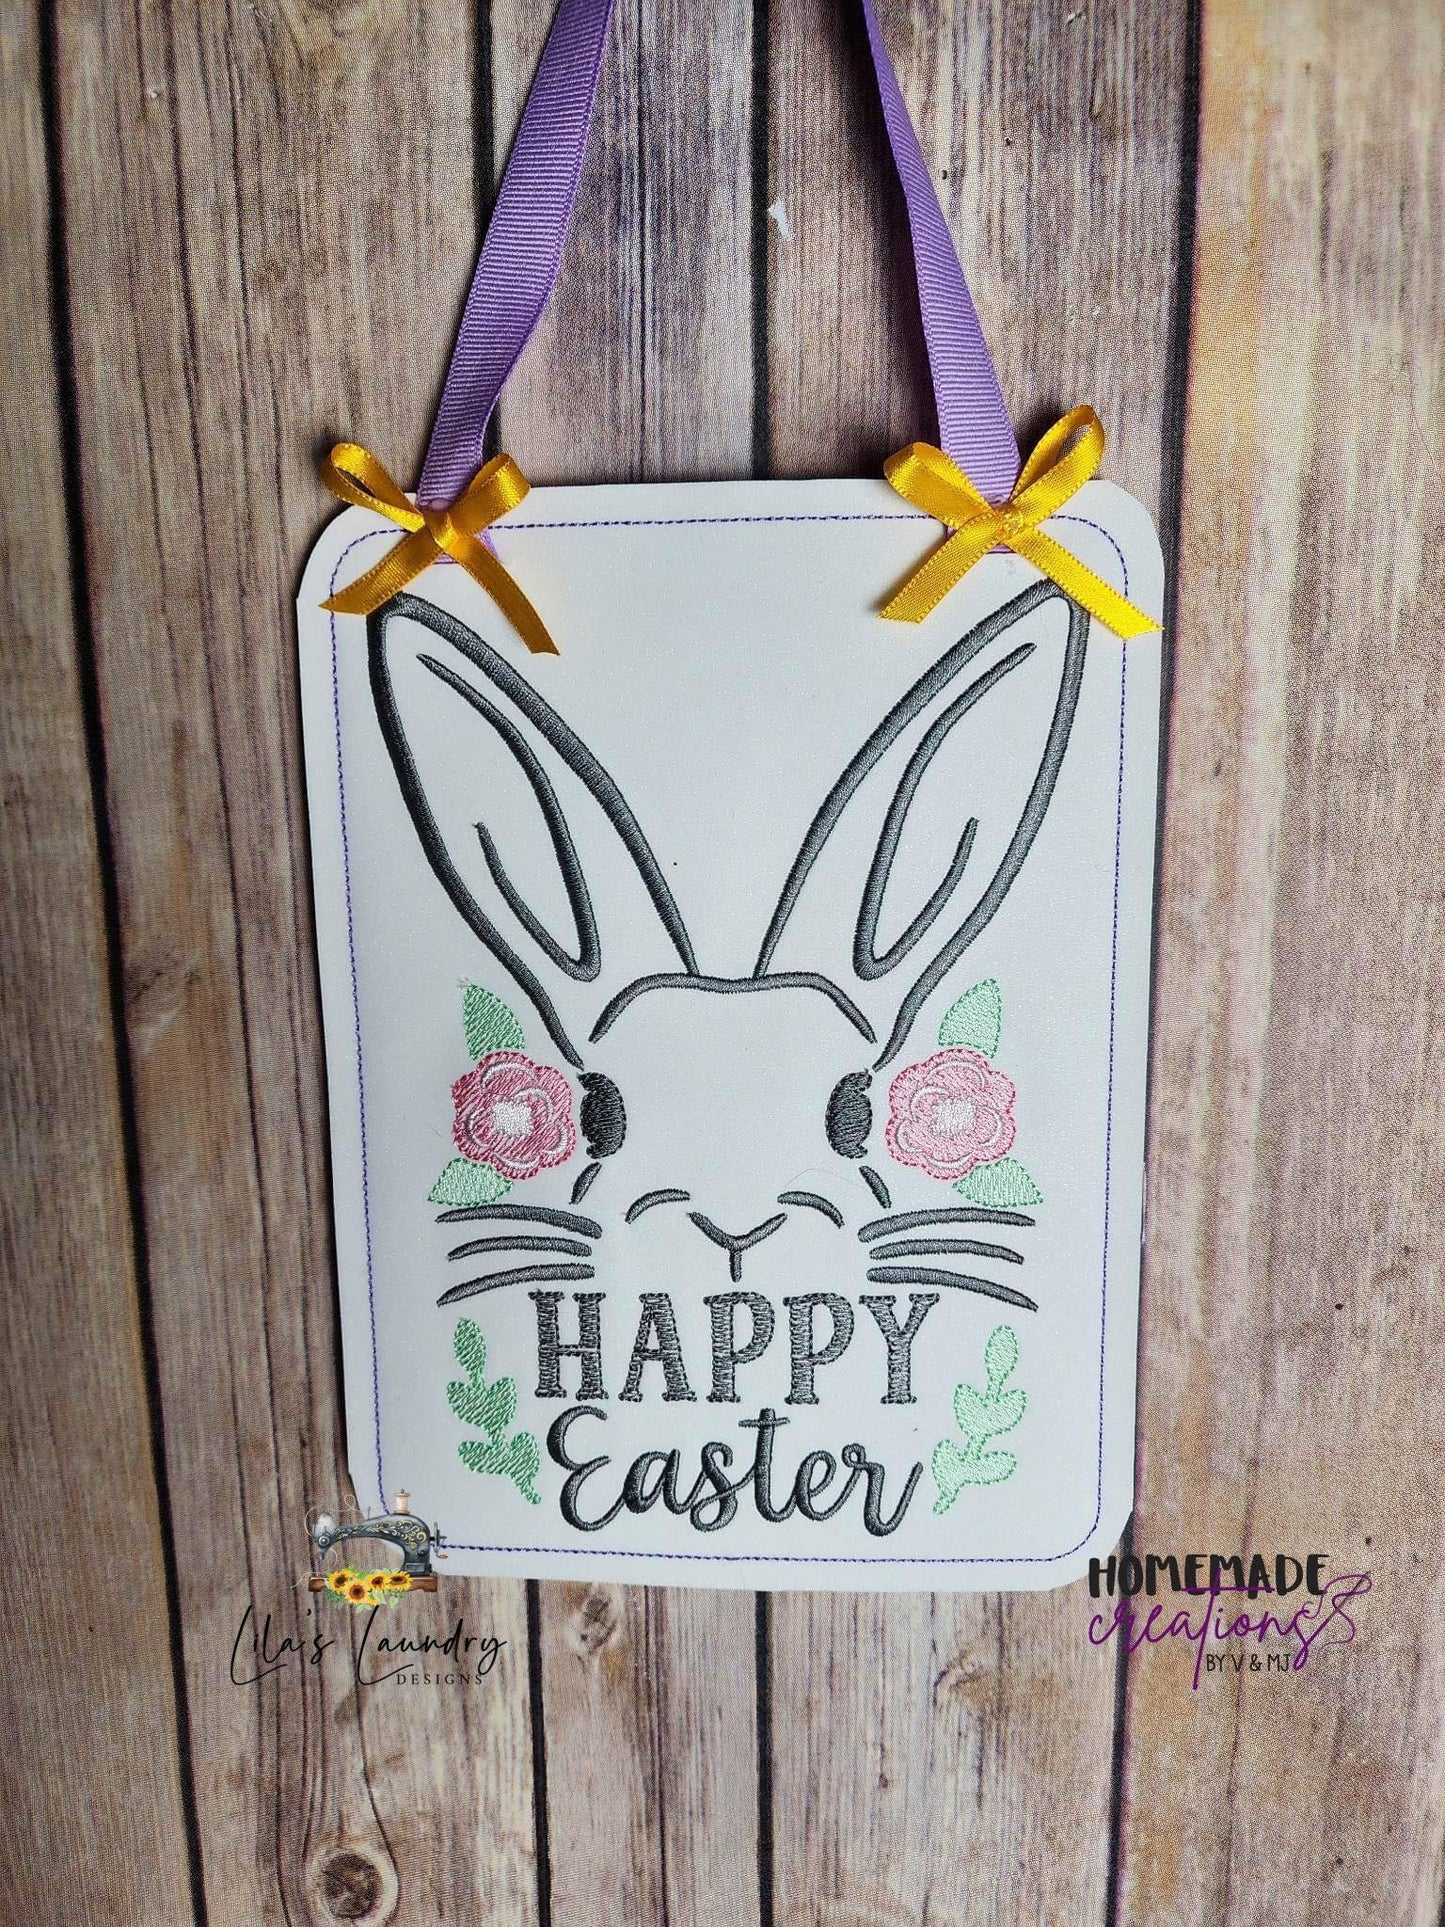 Happy Easter Door Sign - 2 sizes - Digital Embroidery Design